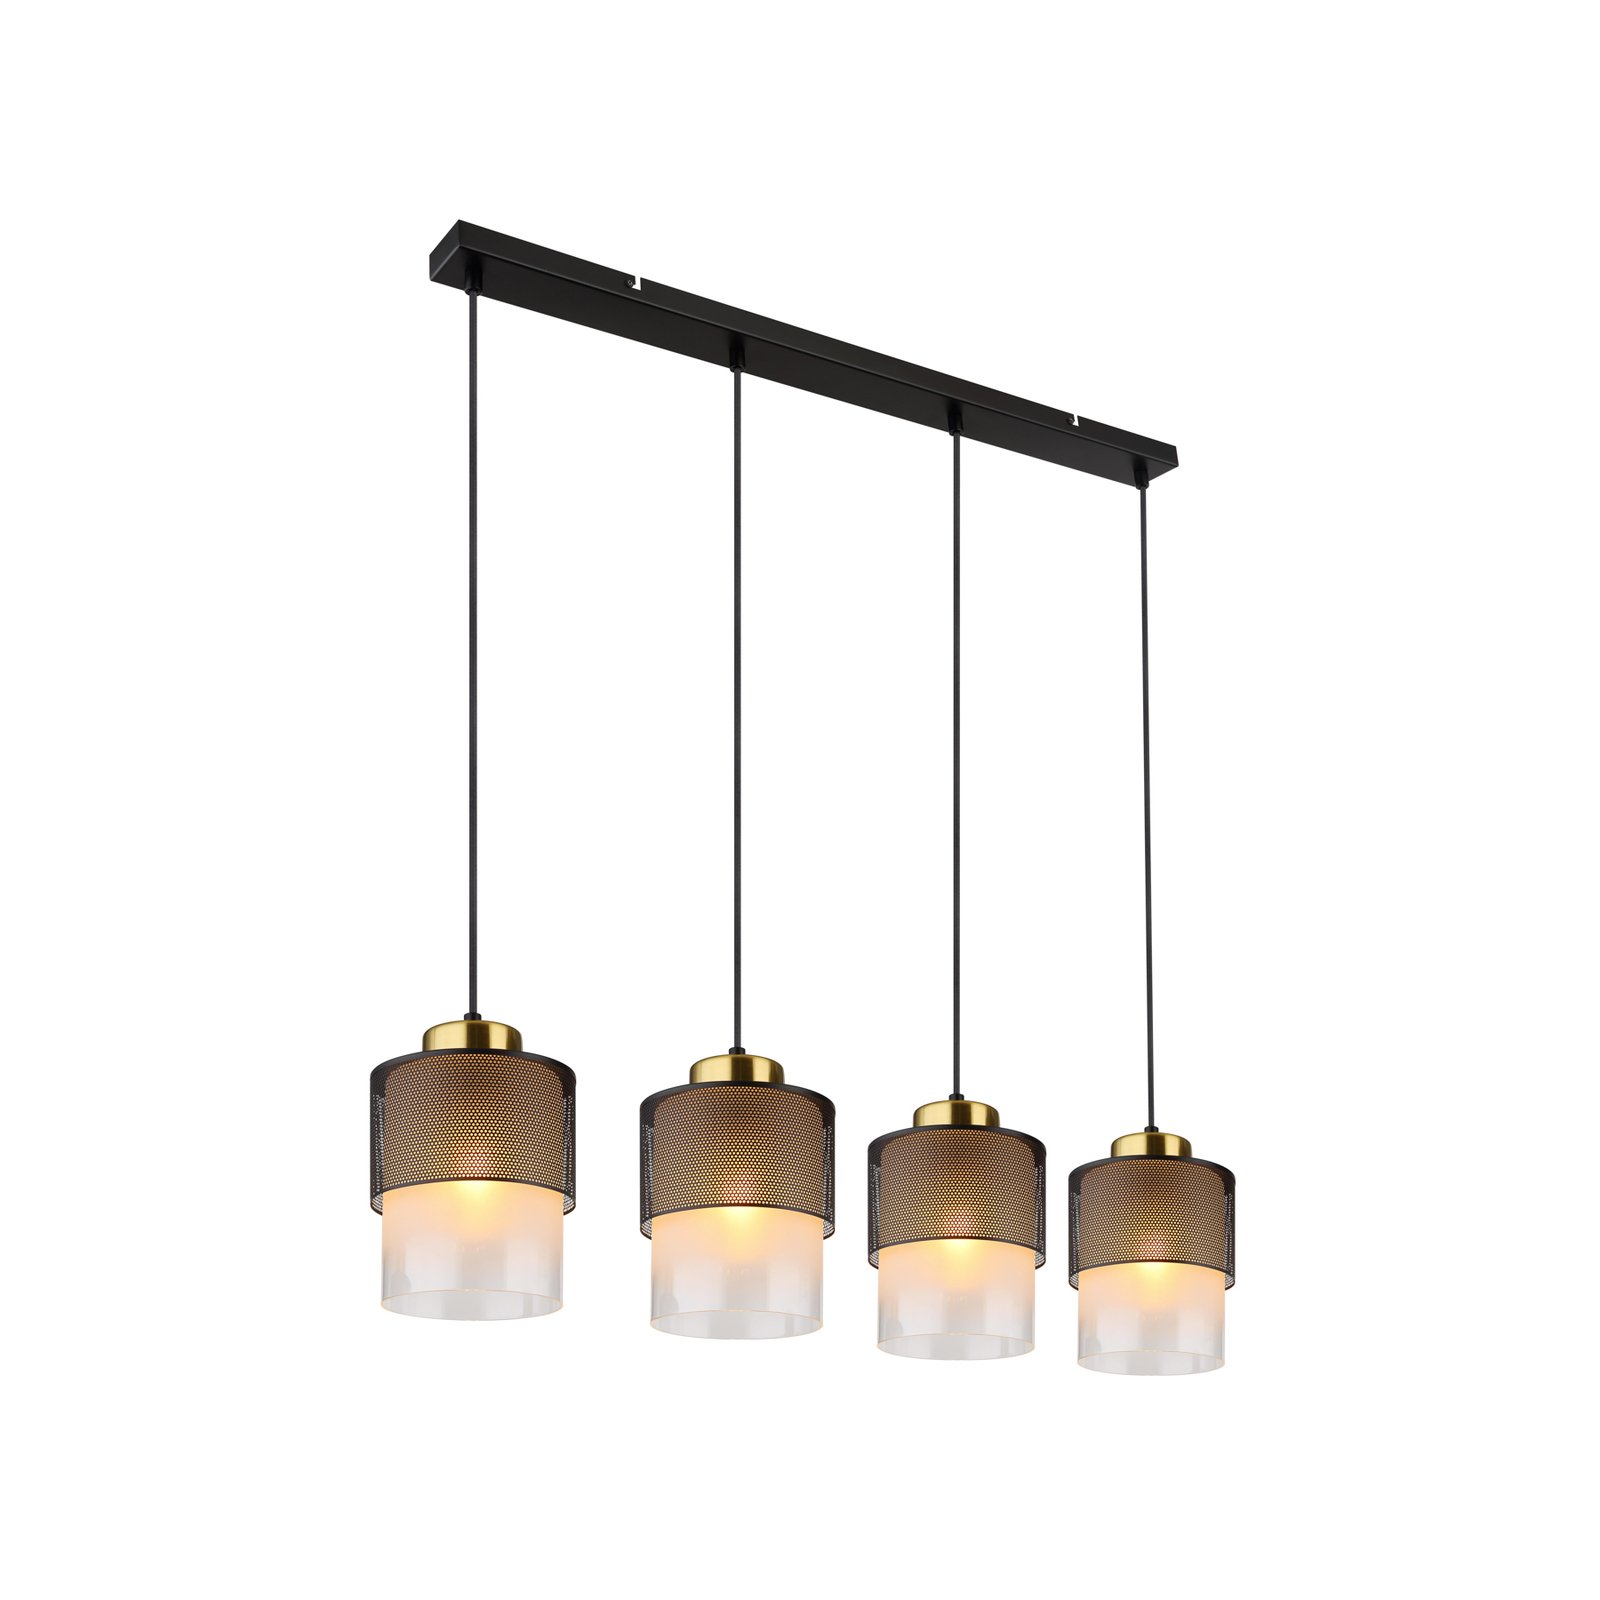 Olga hanglamp, lengte 91 cm, zwart, 4-lamps, metaal/glas